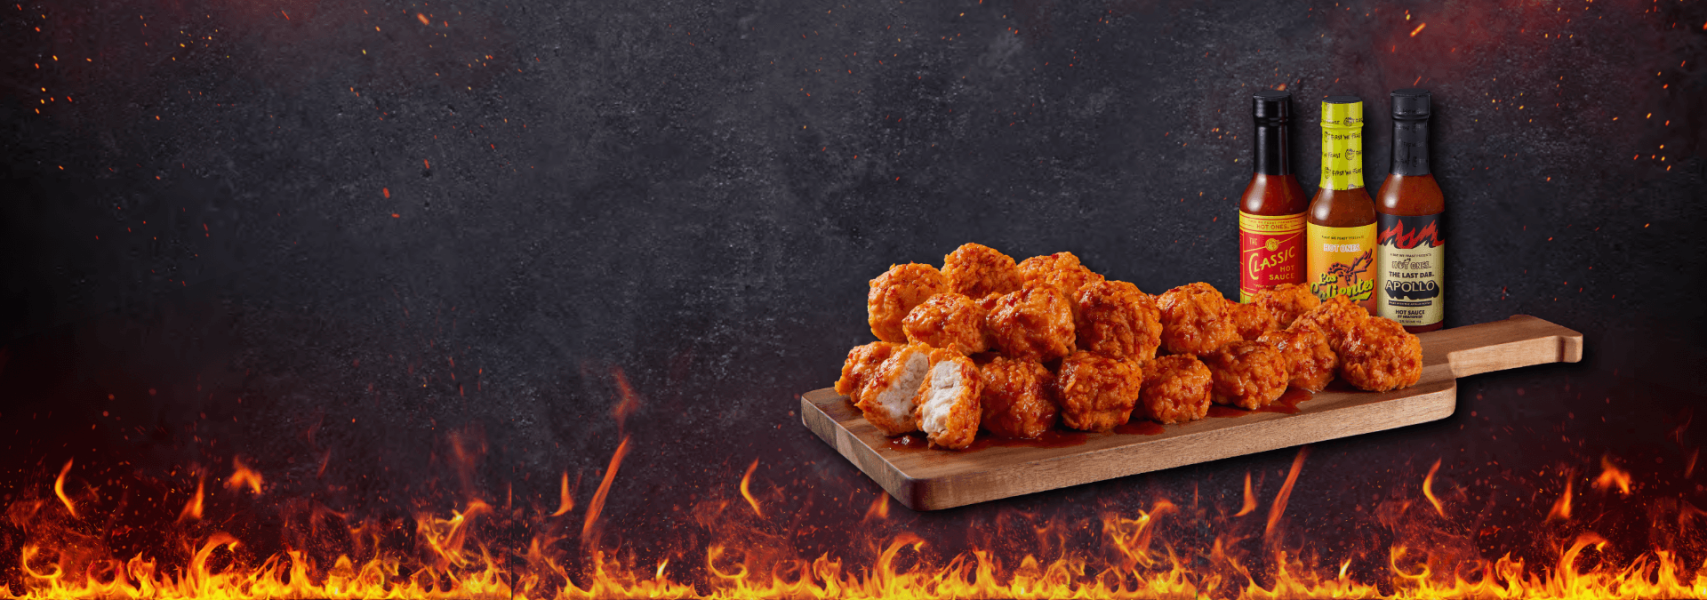 Hot ones boneless hot wings and sauce: John Soules Foods